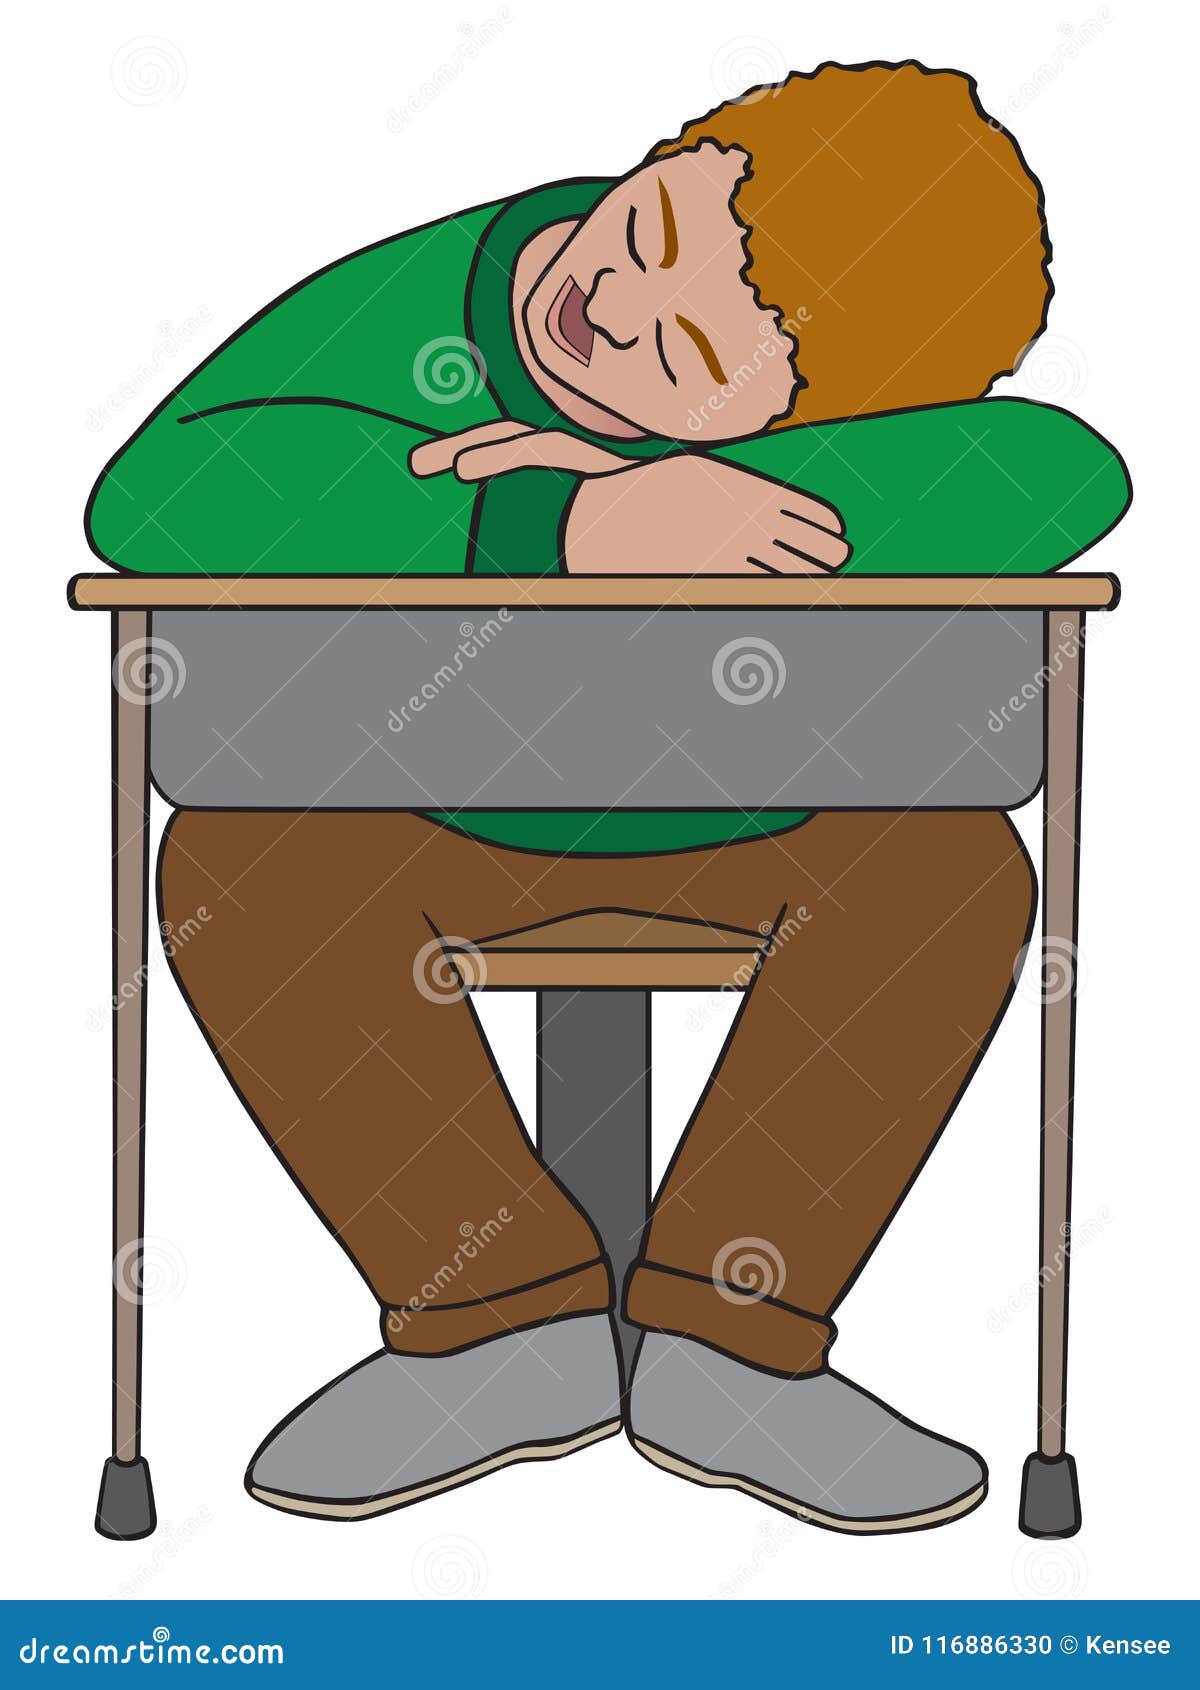 Tired Teacher Cartoon - werohmedia